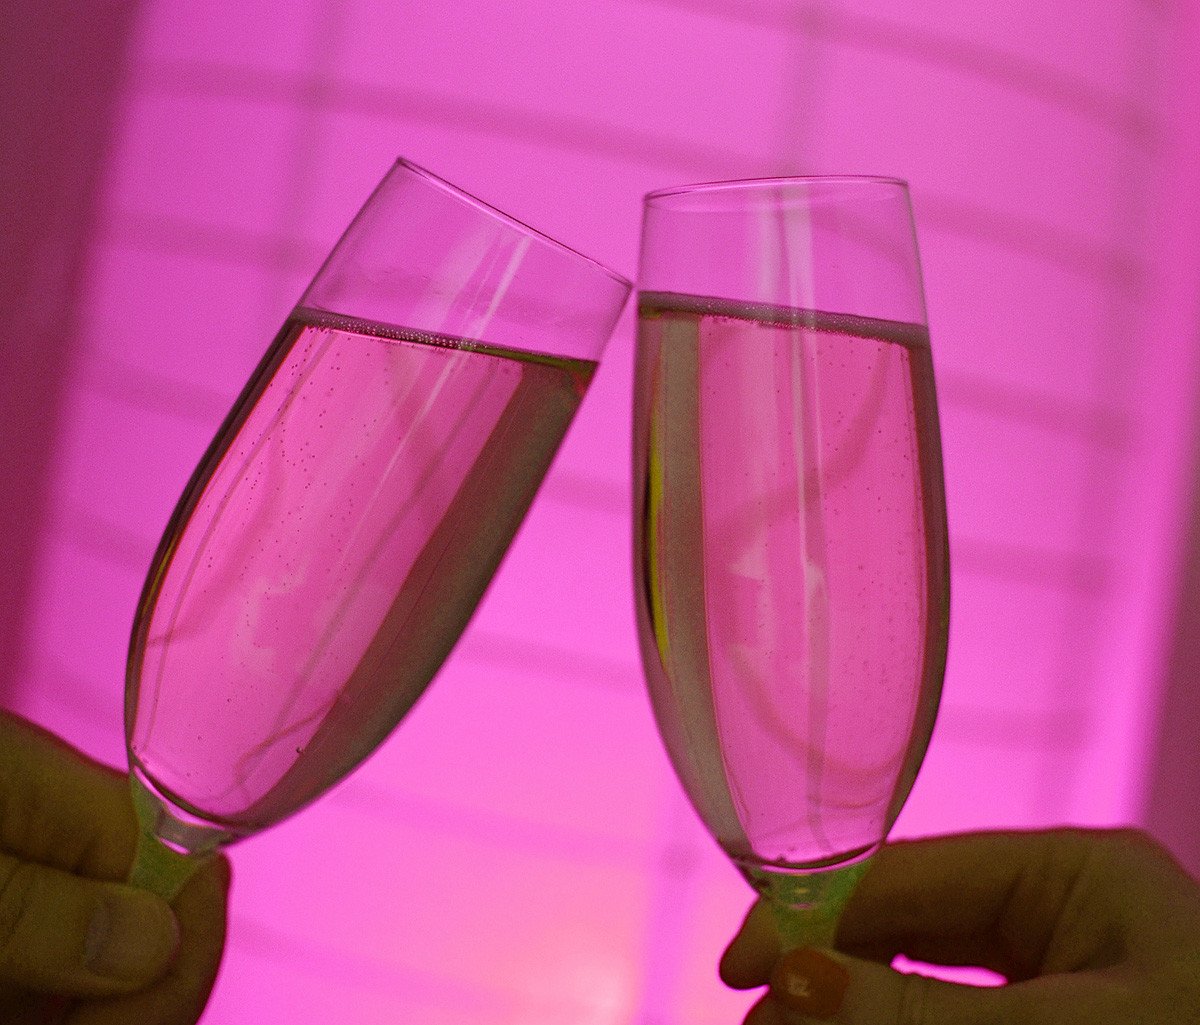 champagne glasses for Valentine's Day